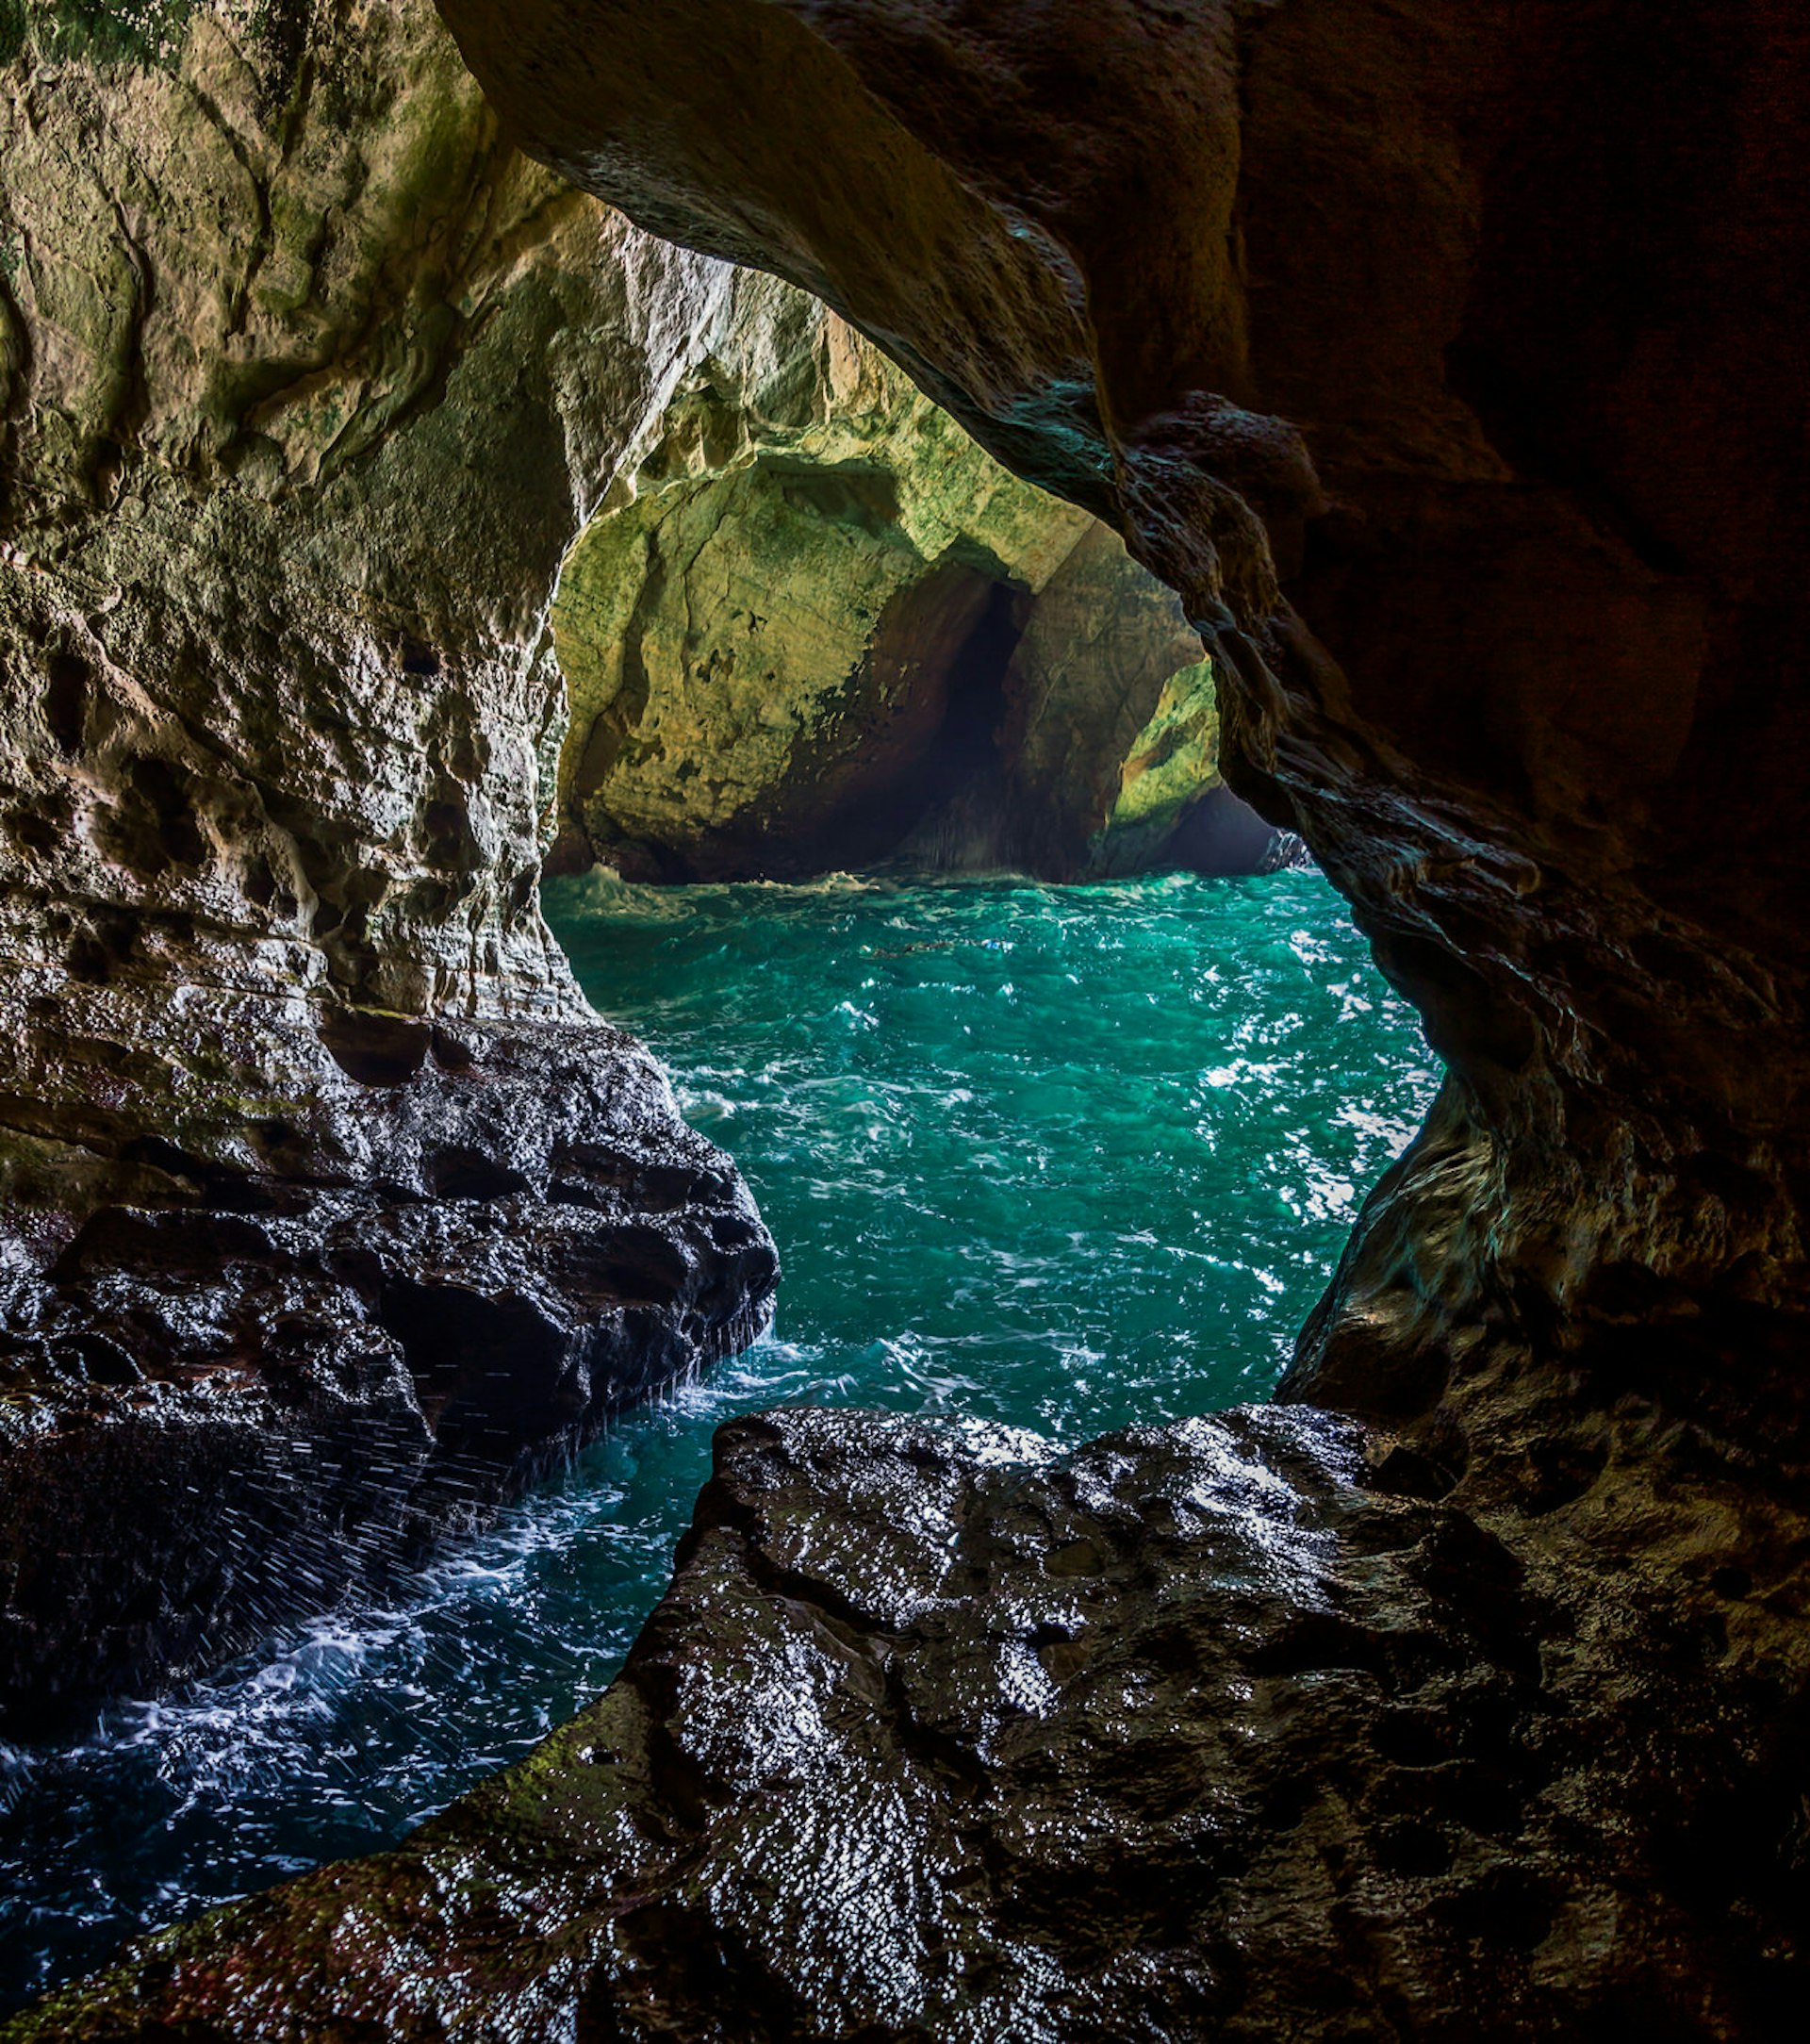 A sea cave at Rosh Hanikra, on Israel's north coast. Image by Vadim Petrakov / Shutterstock